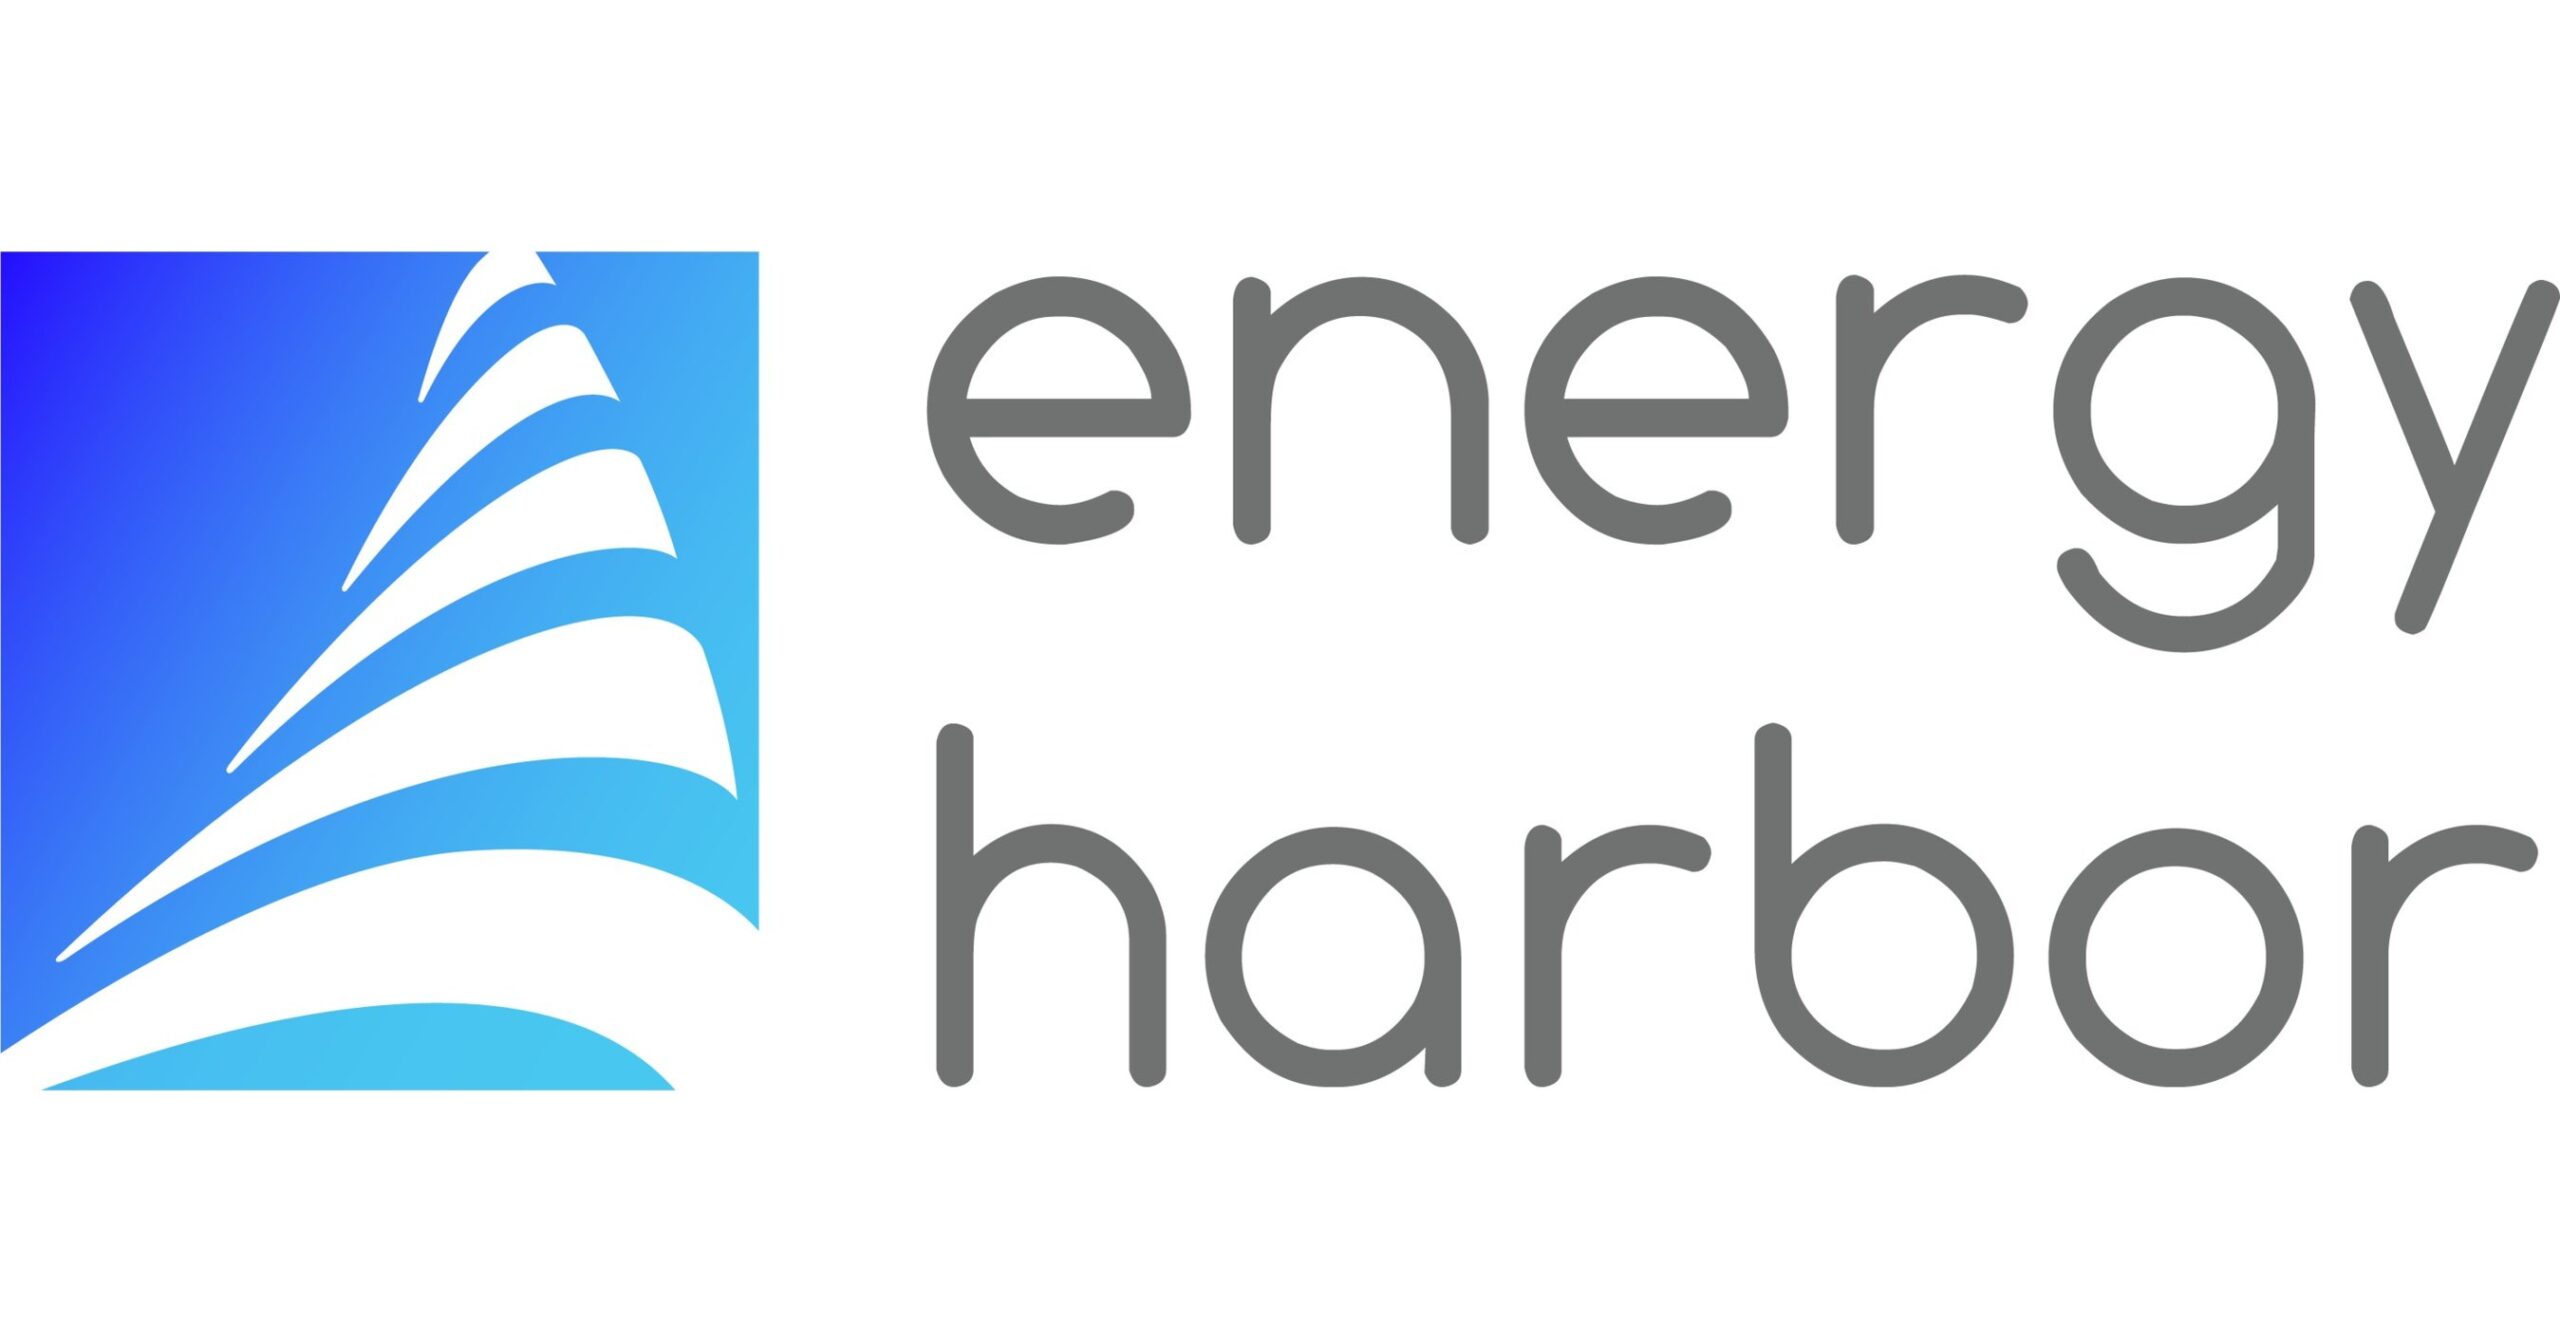 Energy Harbor Logo